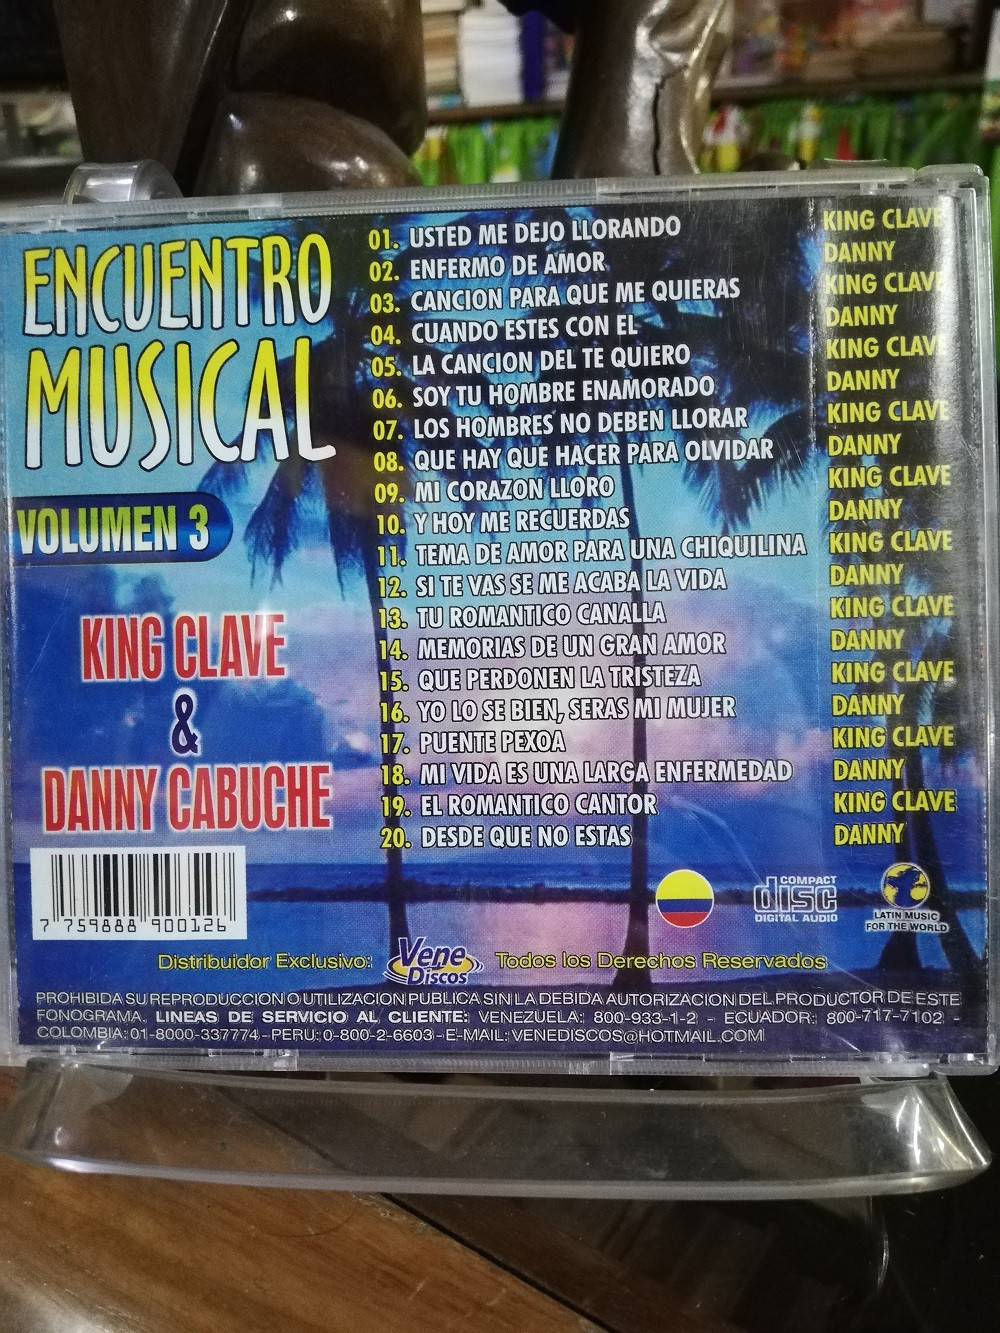 Imagen CD KING CLAVE & DANNY CABUCHE - ENCUENTRO MUSICAL VOL. 3 2